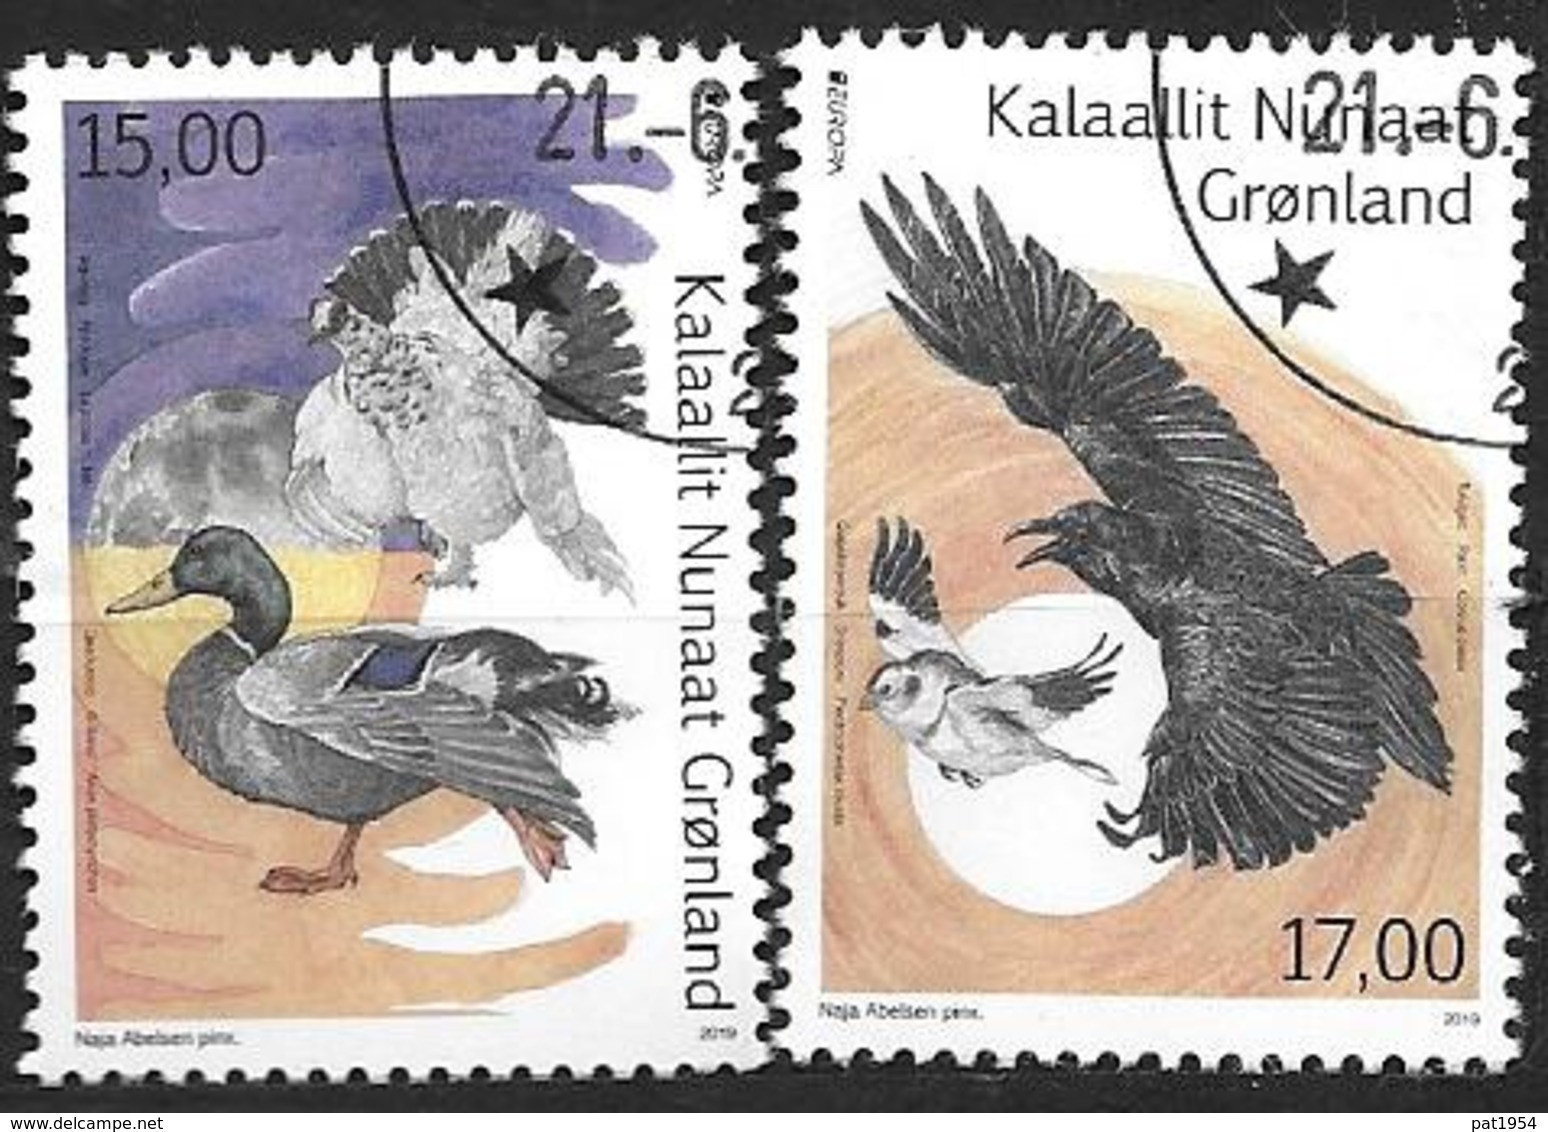 Groënland 2019, N° 792/793 Oblitérés Europa Oiseaux - Usados